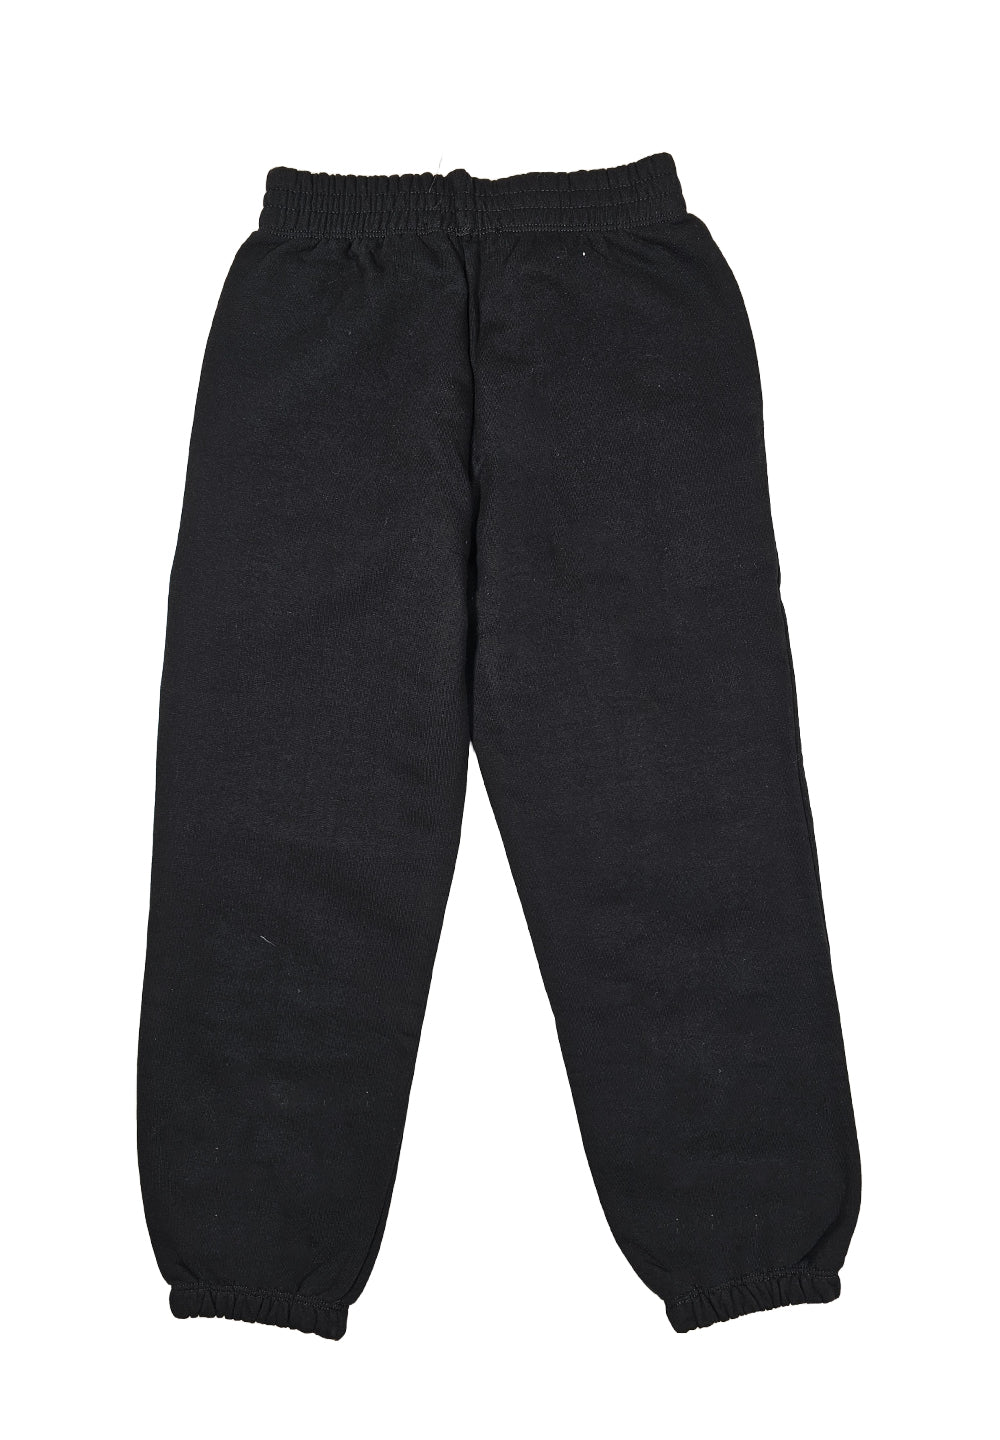 Black sweatpants for girls